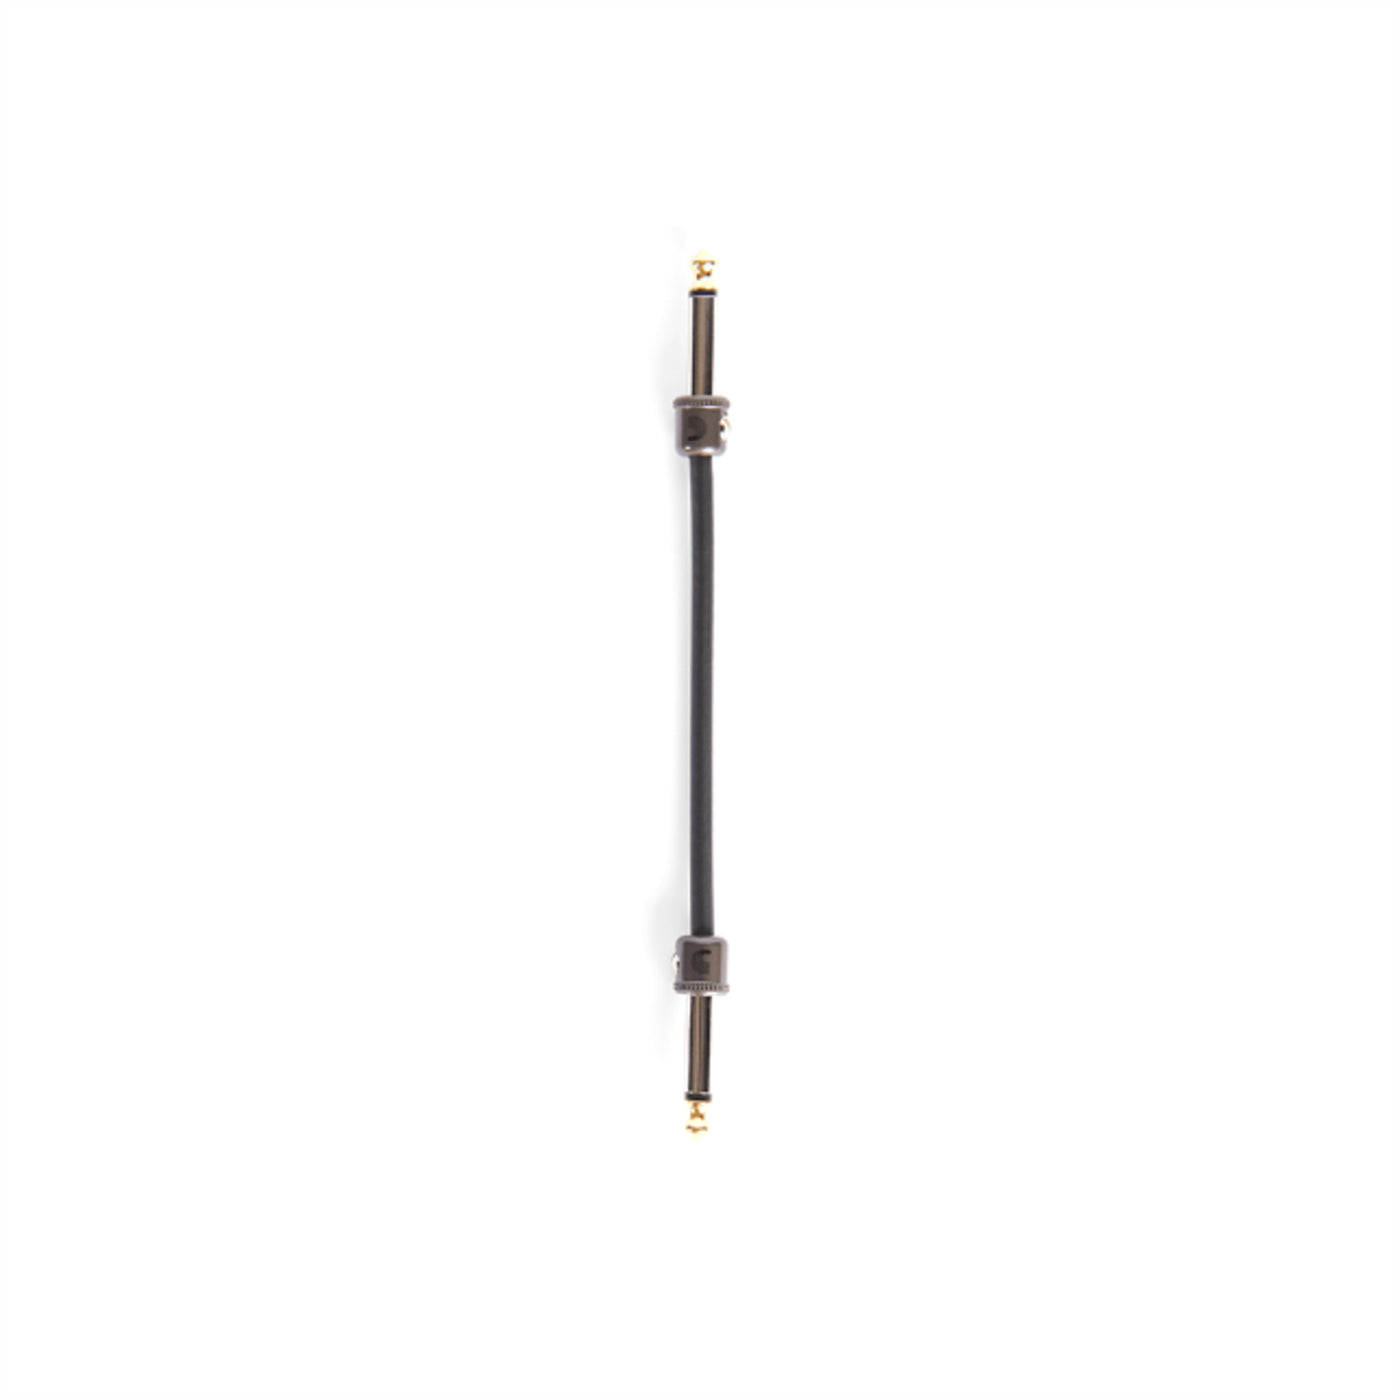 D'Addario DIY Solderless Cable Kit with Mini Plugs (PW-MGPKIT-10)